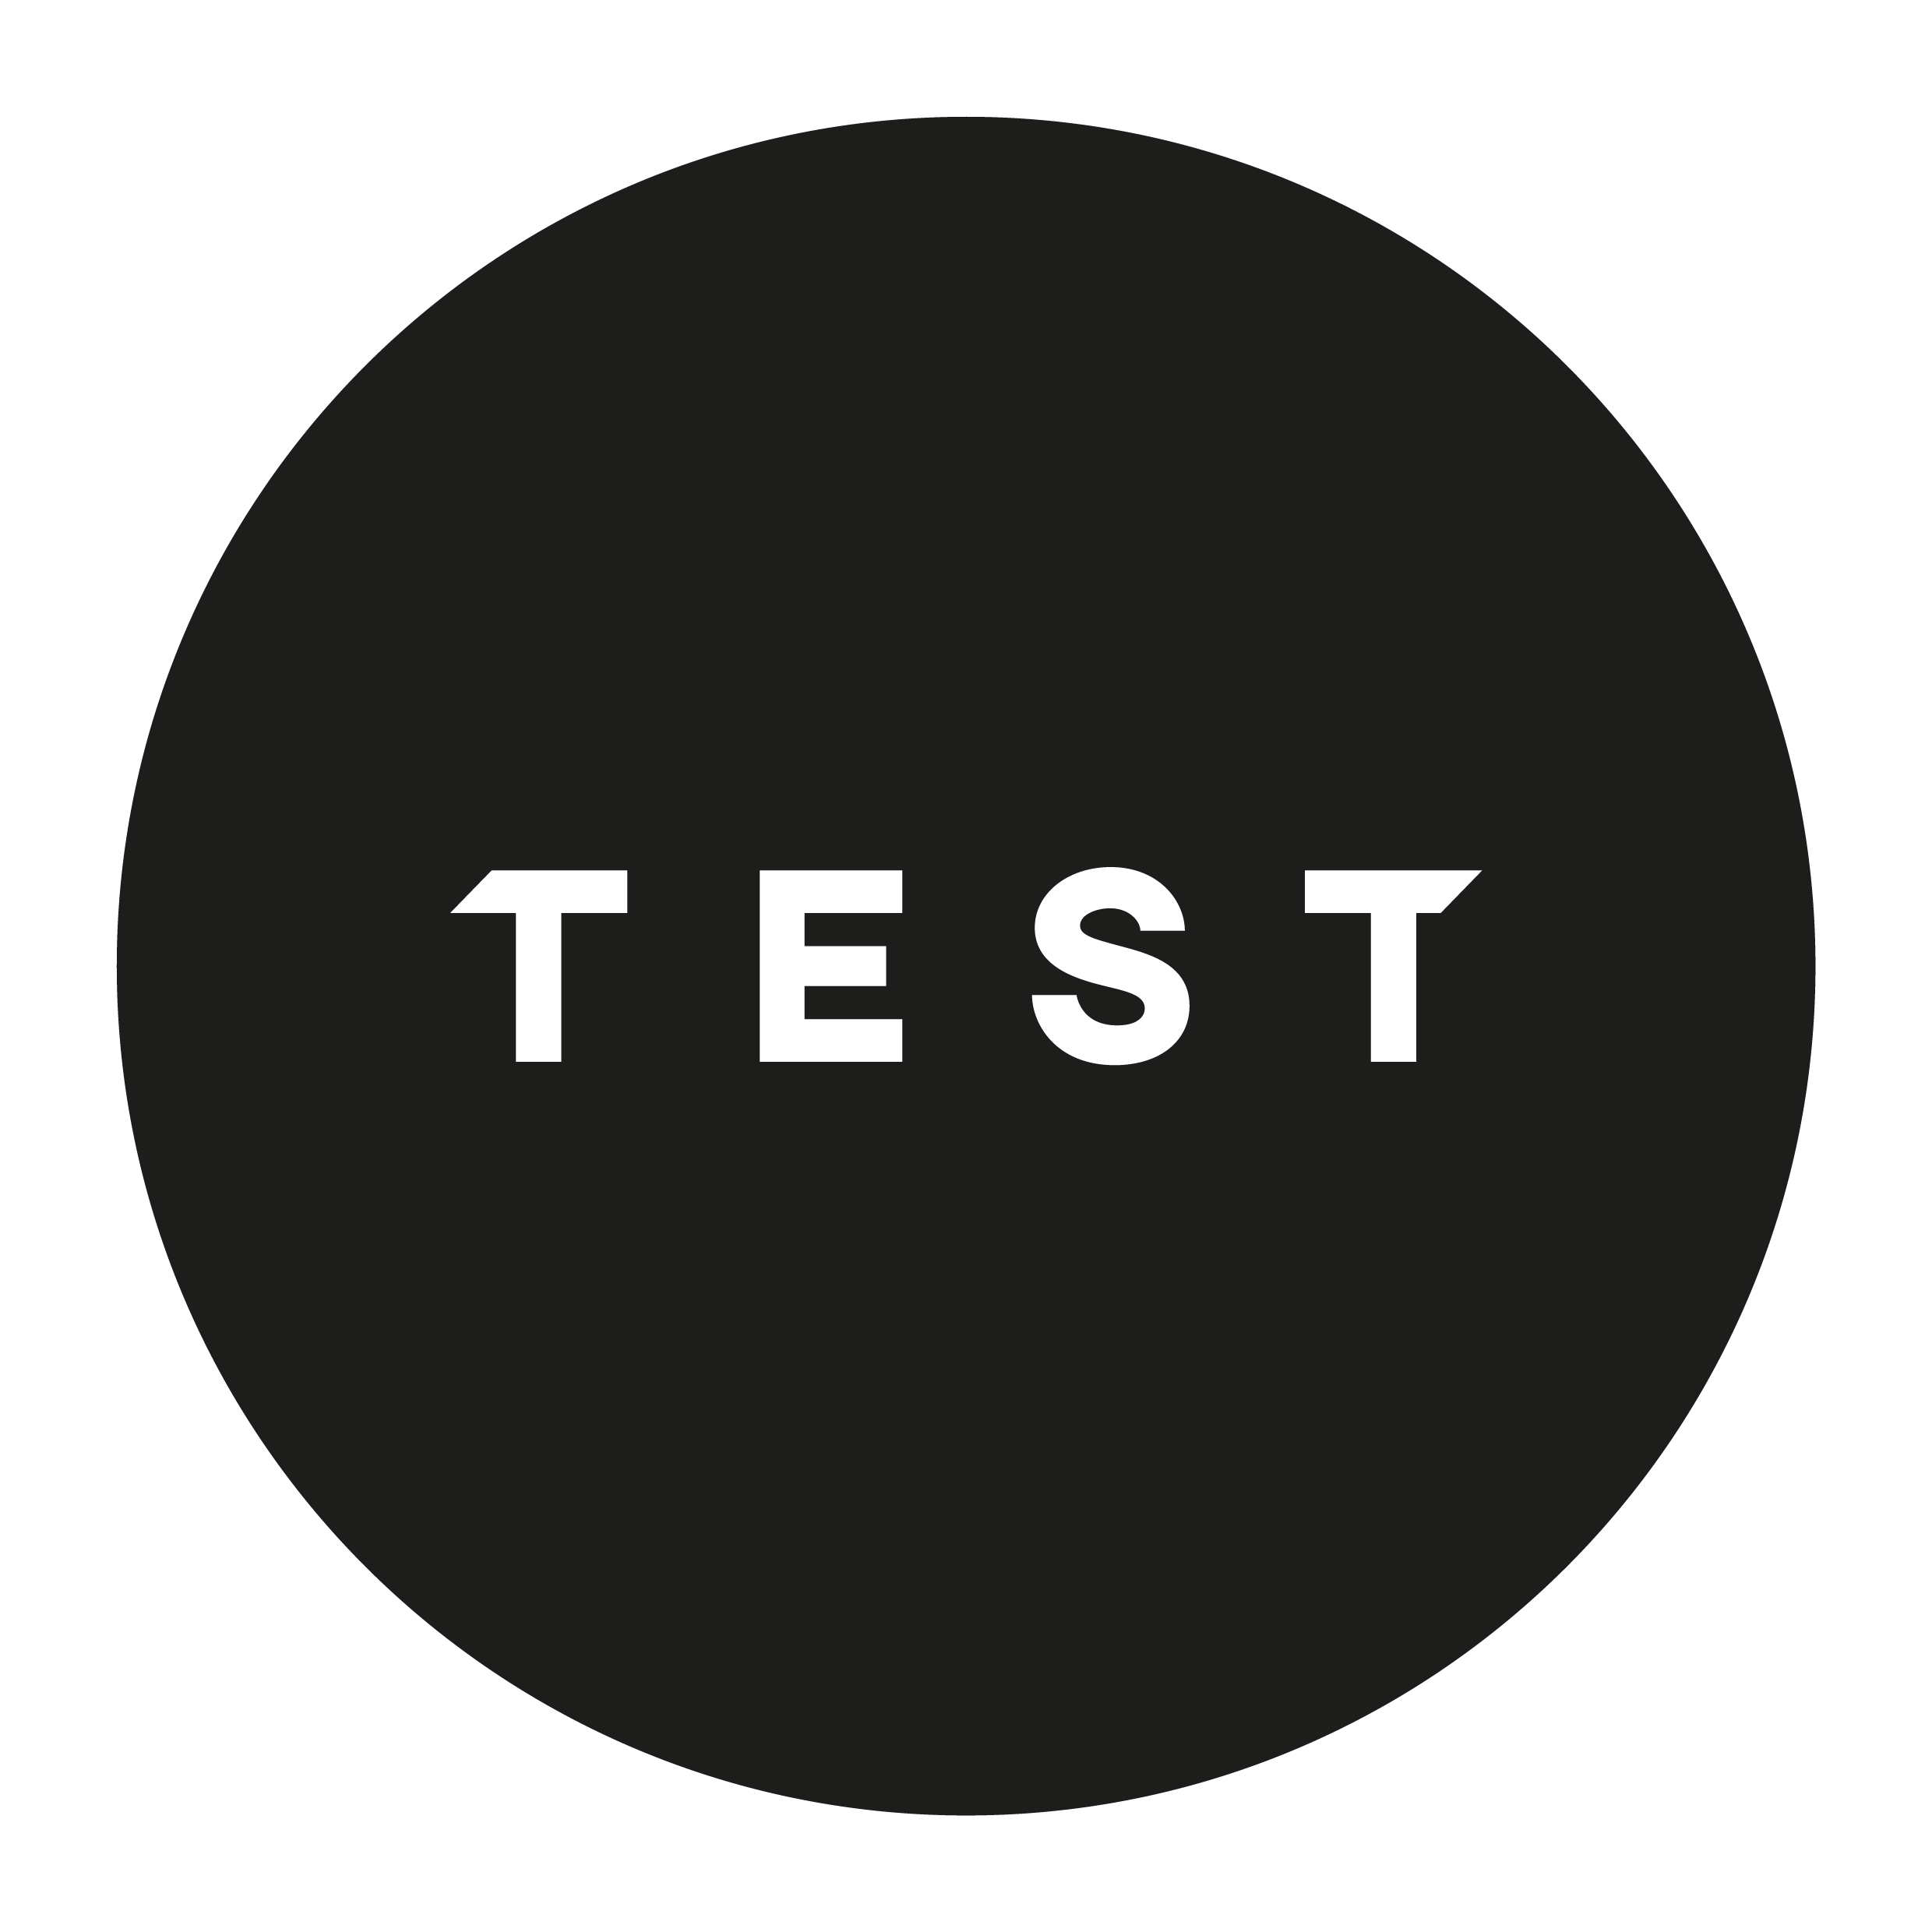 Test. Тест логотип. Test надпись. Кнопка тест. Слово тест.